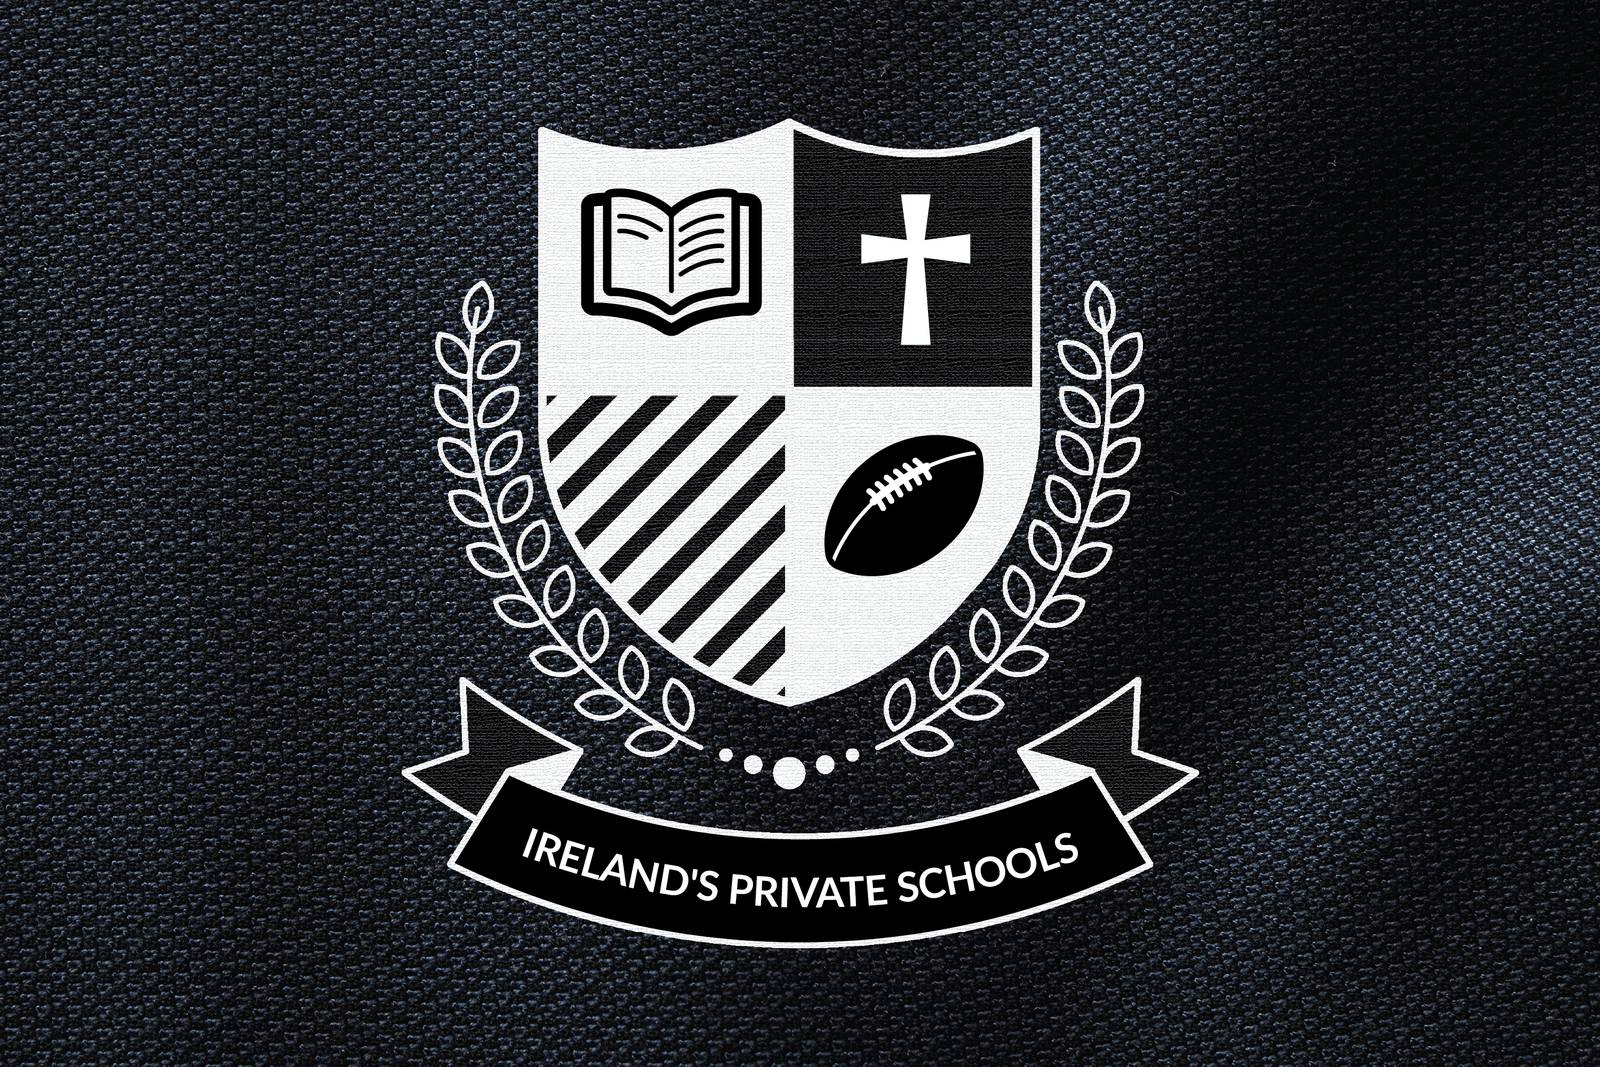 Ireland's private schools